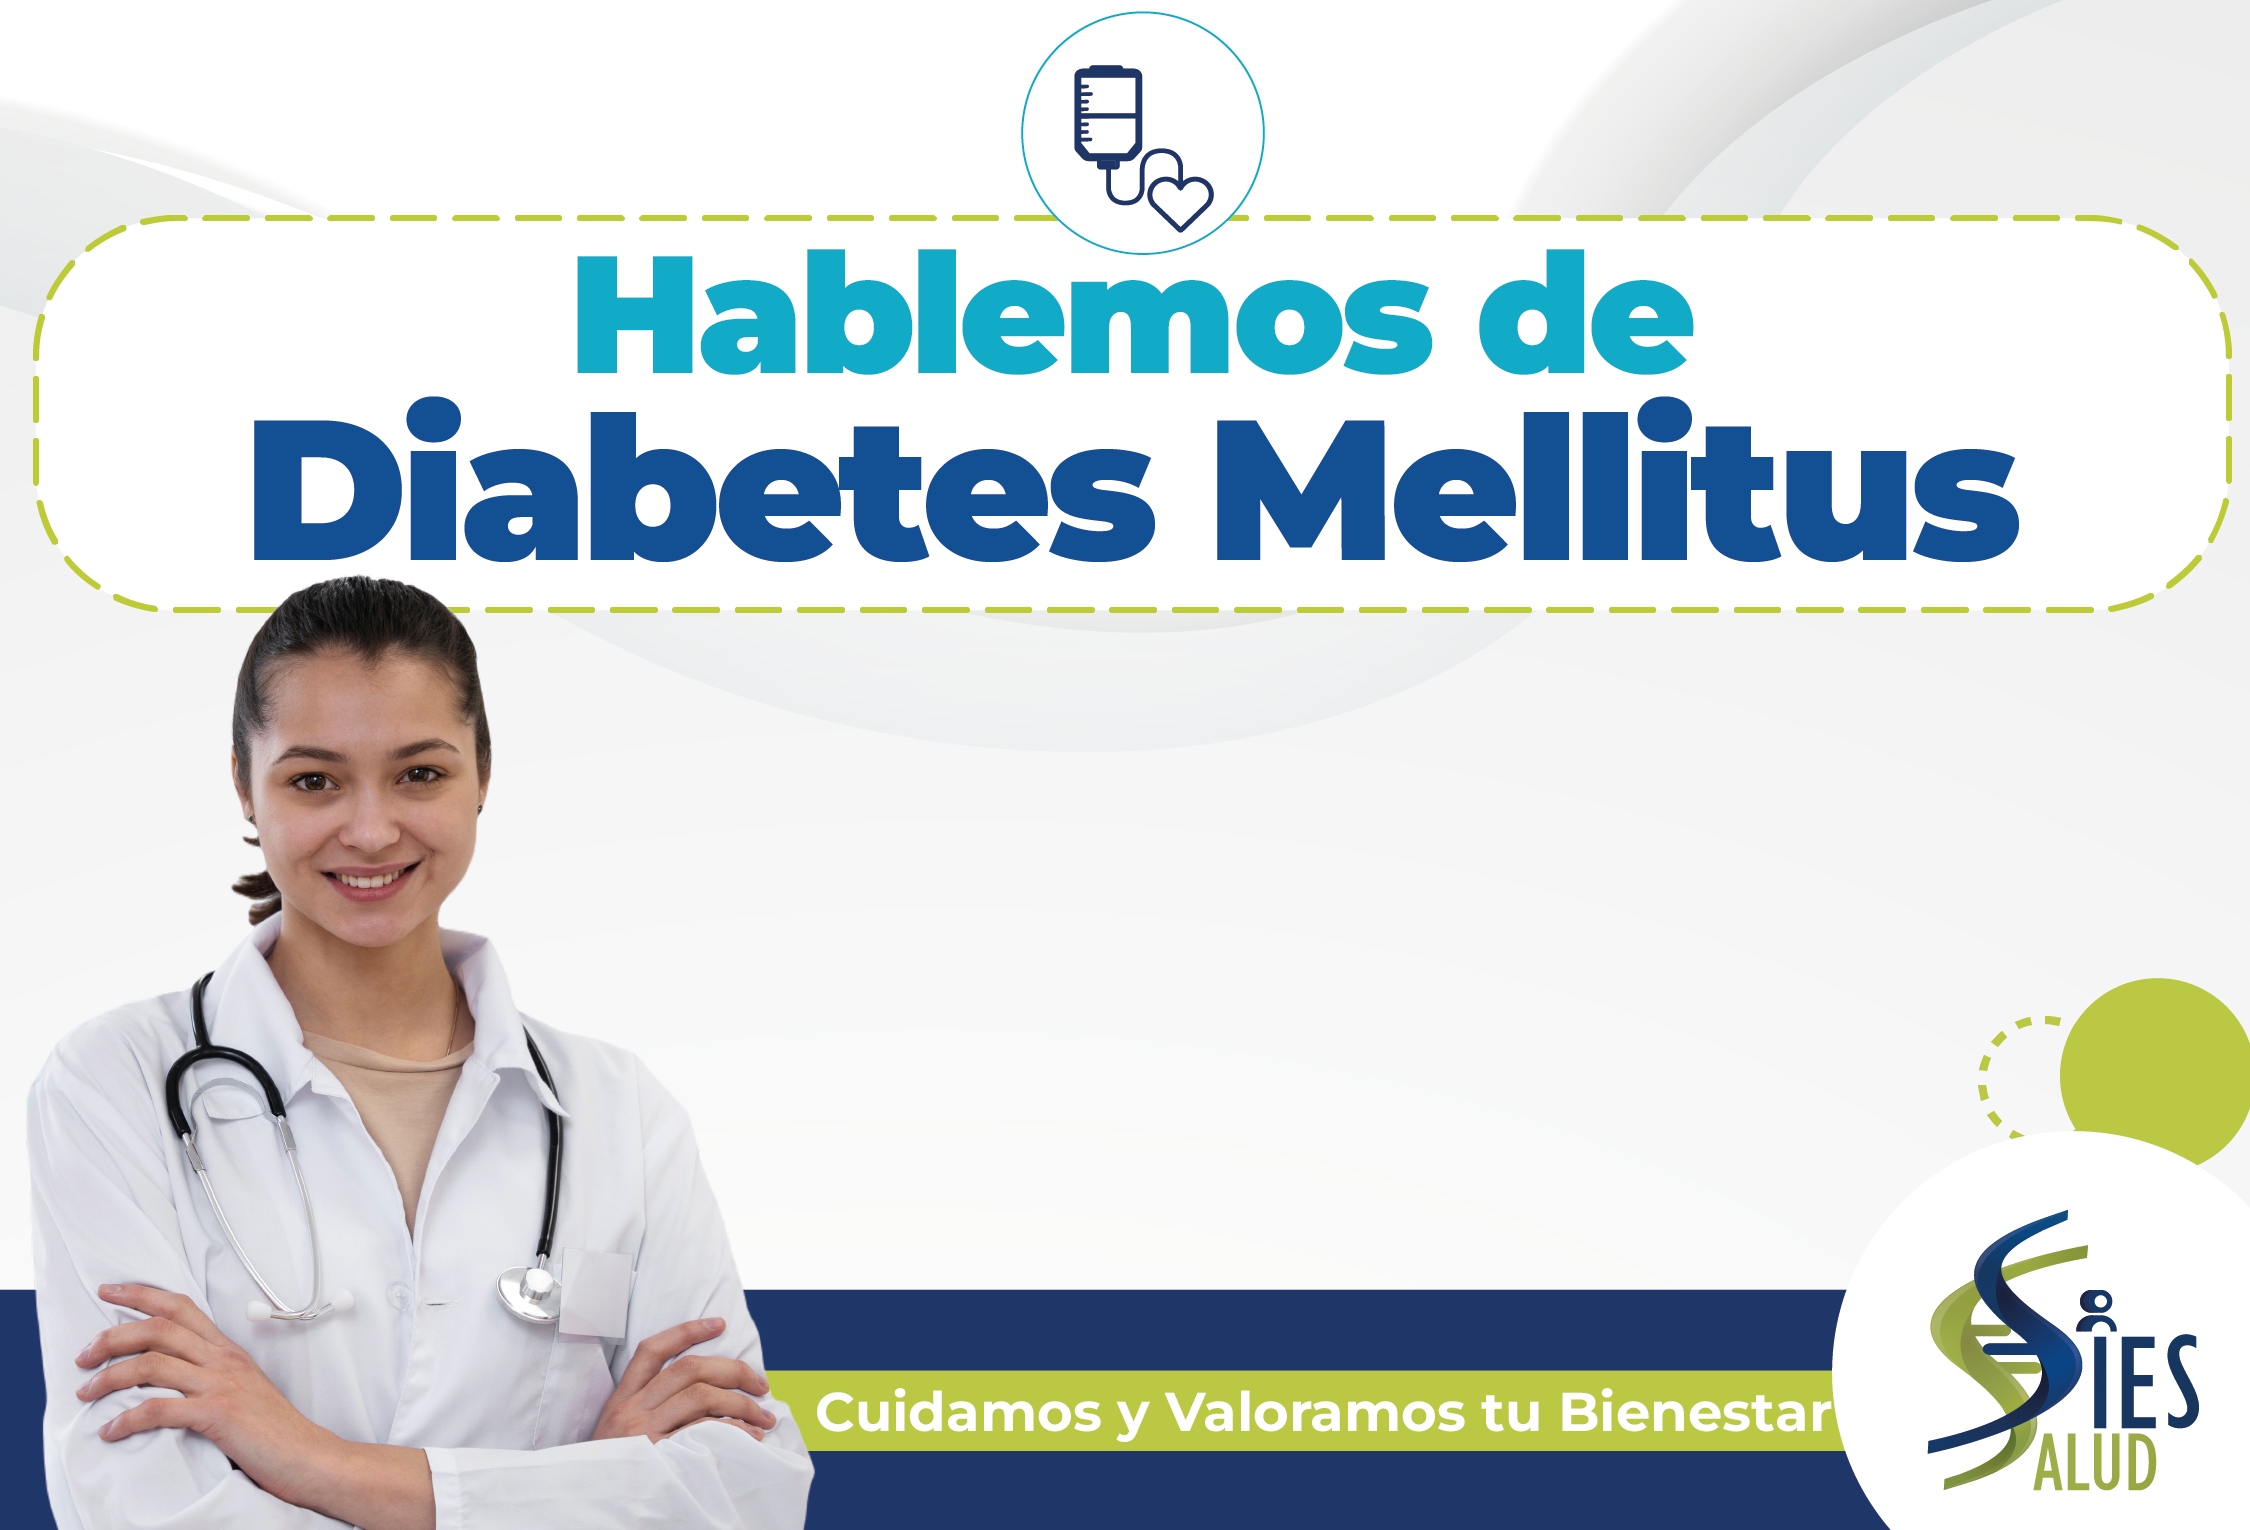 Hablemos de Diabetes Mellitus.